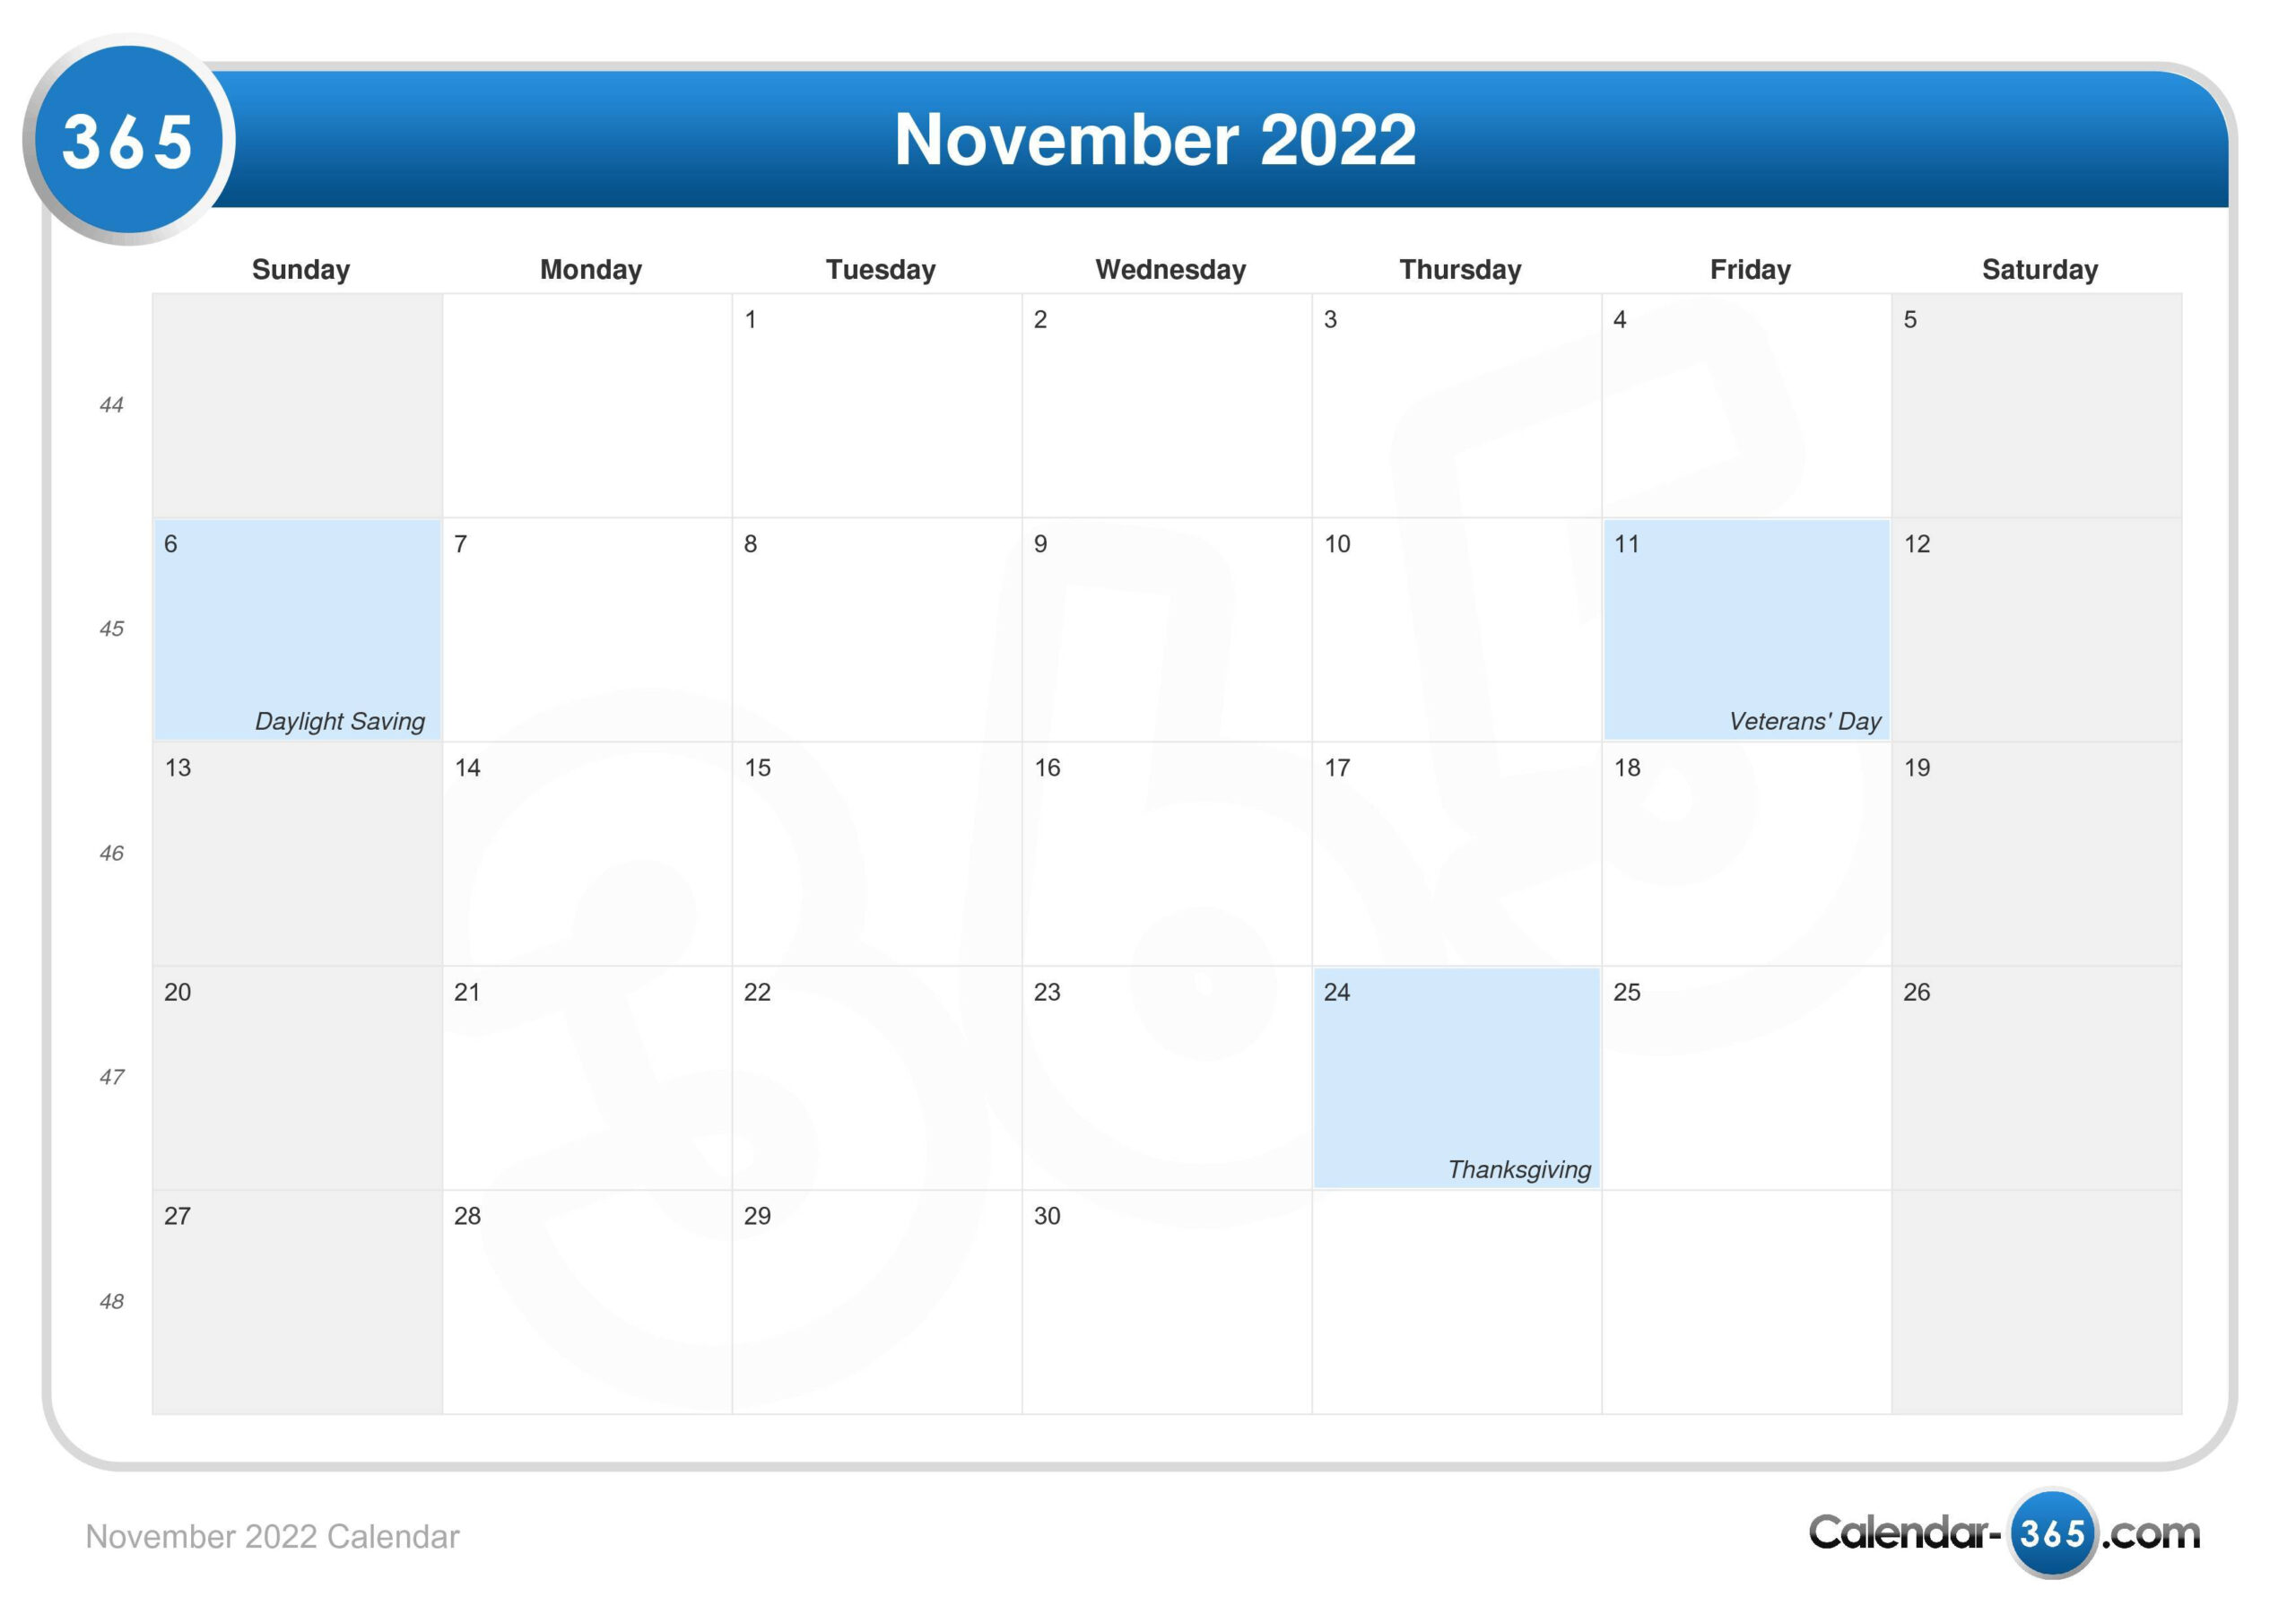 Pick Calendar October November 2022